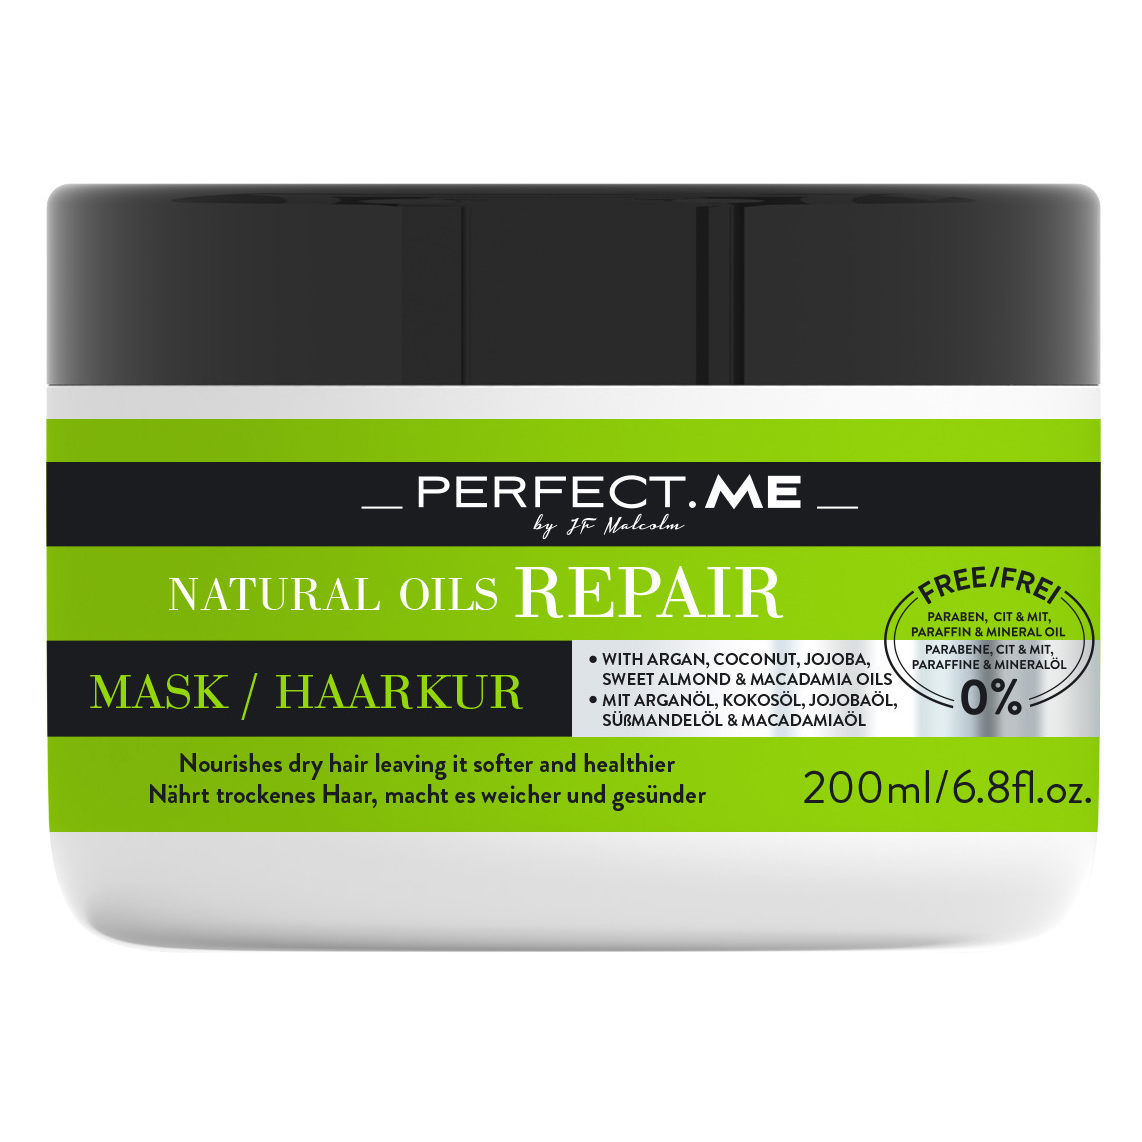 Маски perfect. Perfect hair - маска для волос. Repair Mask белый с черной крышкой 1000 мл. Masil 10 Premium Repair hair Mask картинки. Don’t despare Repair маска.